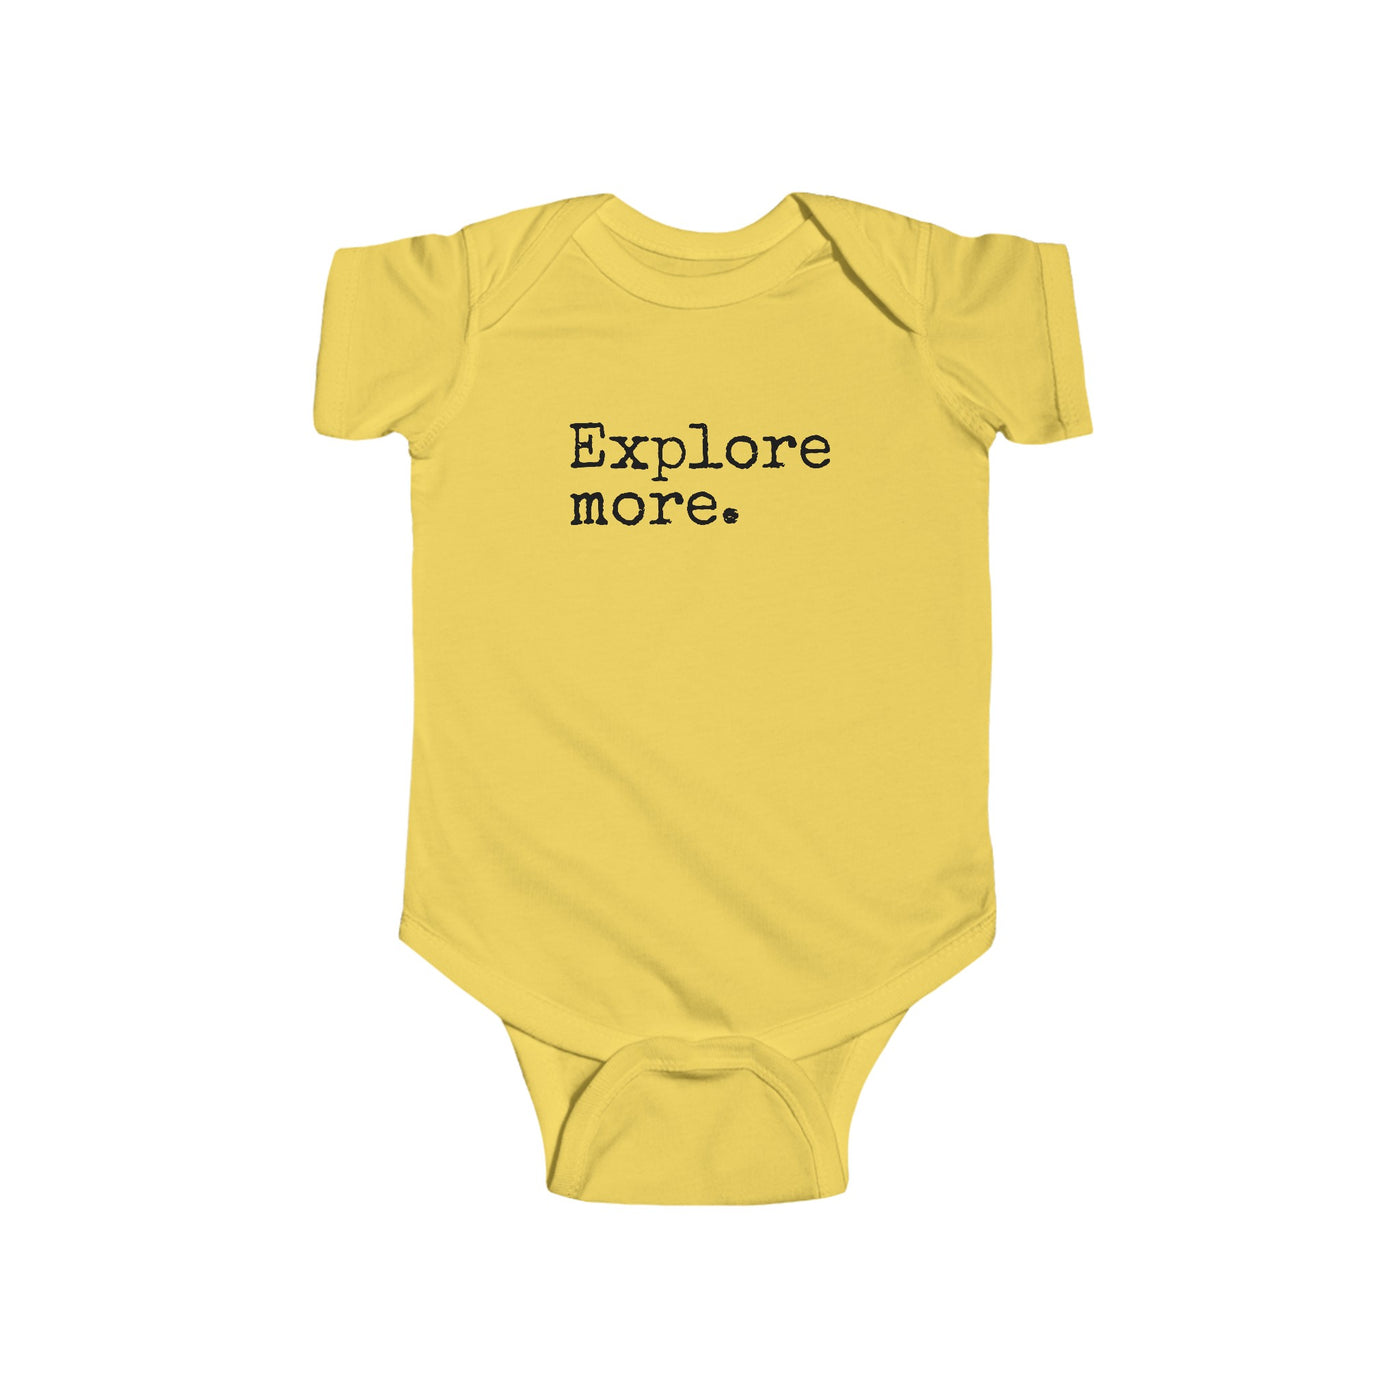 Explore More Baby Bodysuit